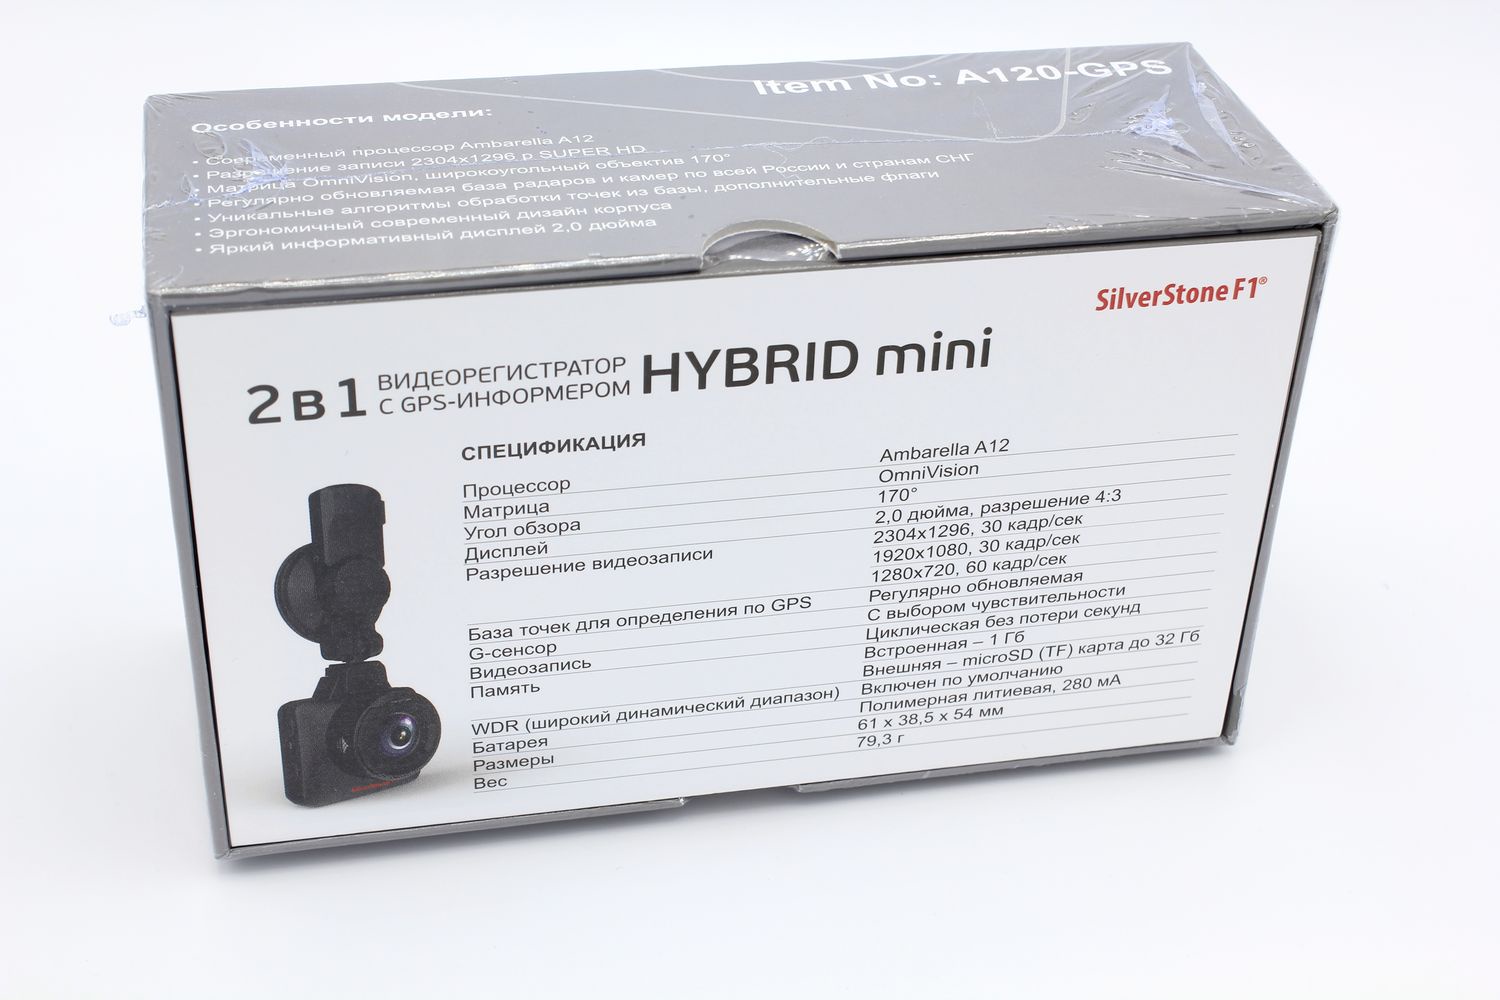 Видеорегистратор silverstone f1 hybrid mini pro инструкция